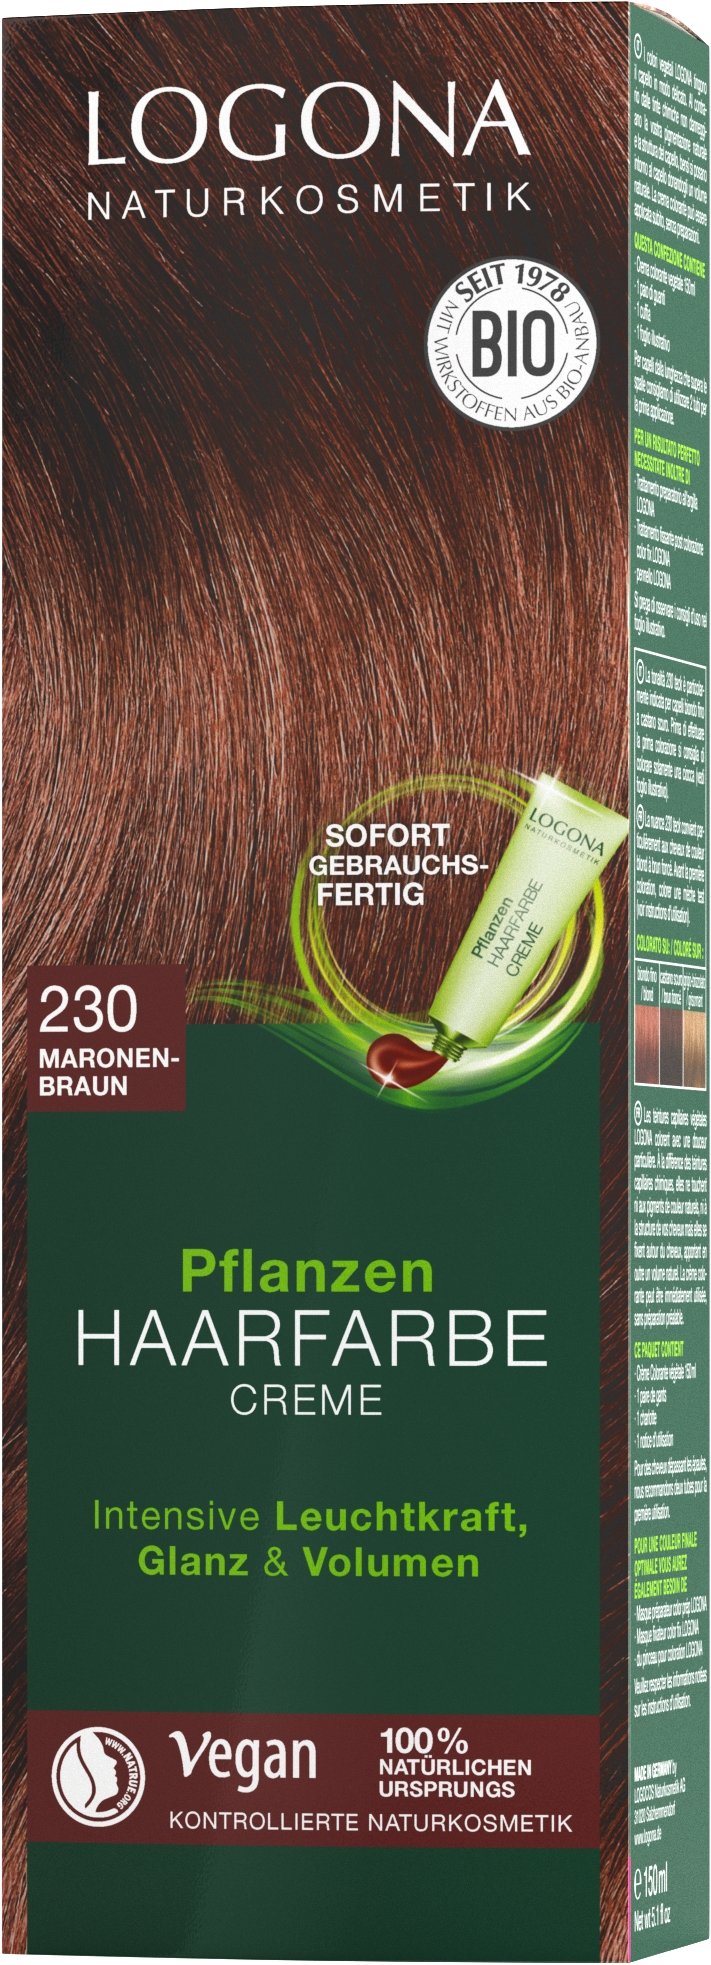 Pflanzen-Haarfarbe Creme 230 Maronenbr. | Haarfarben | Logona